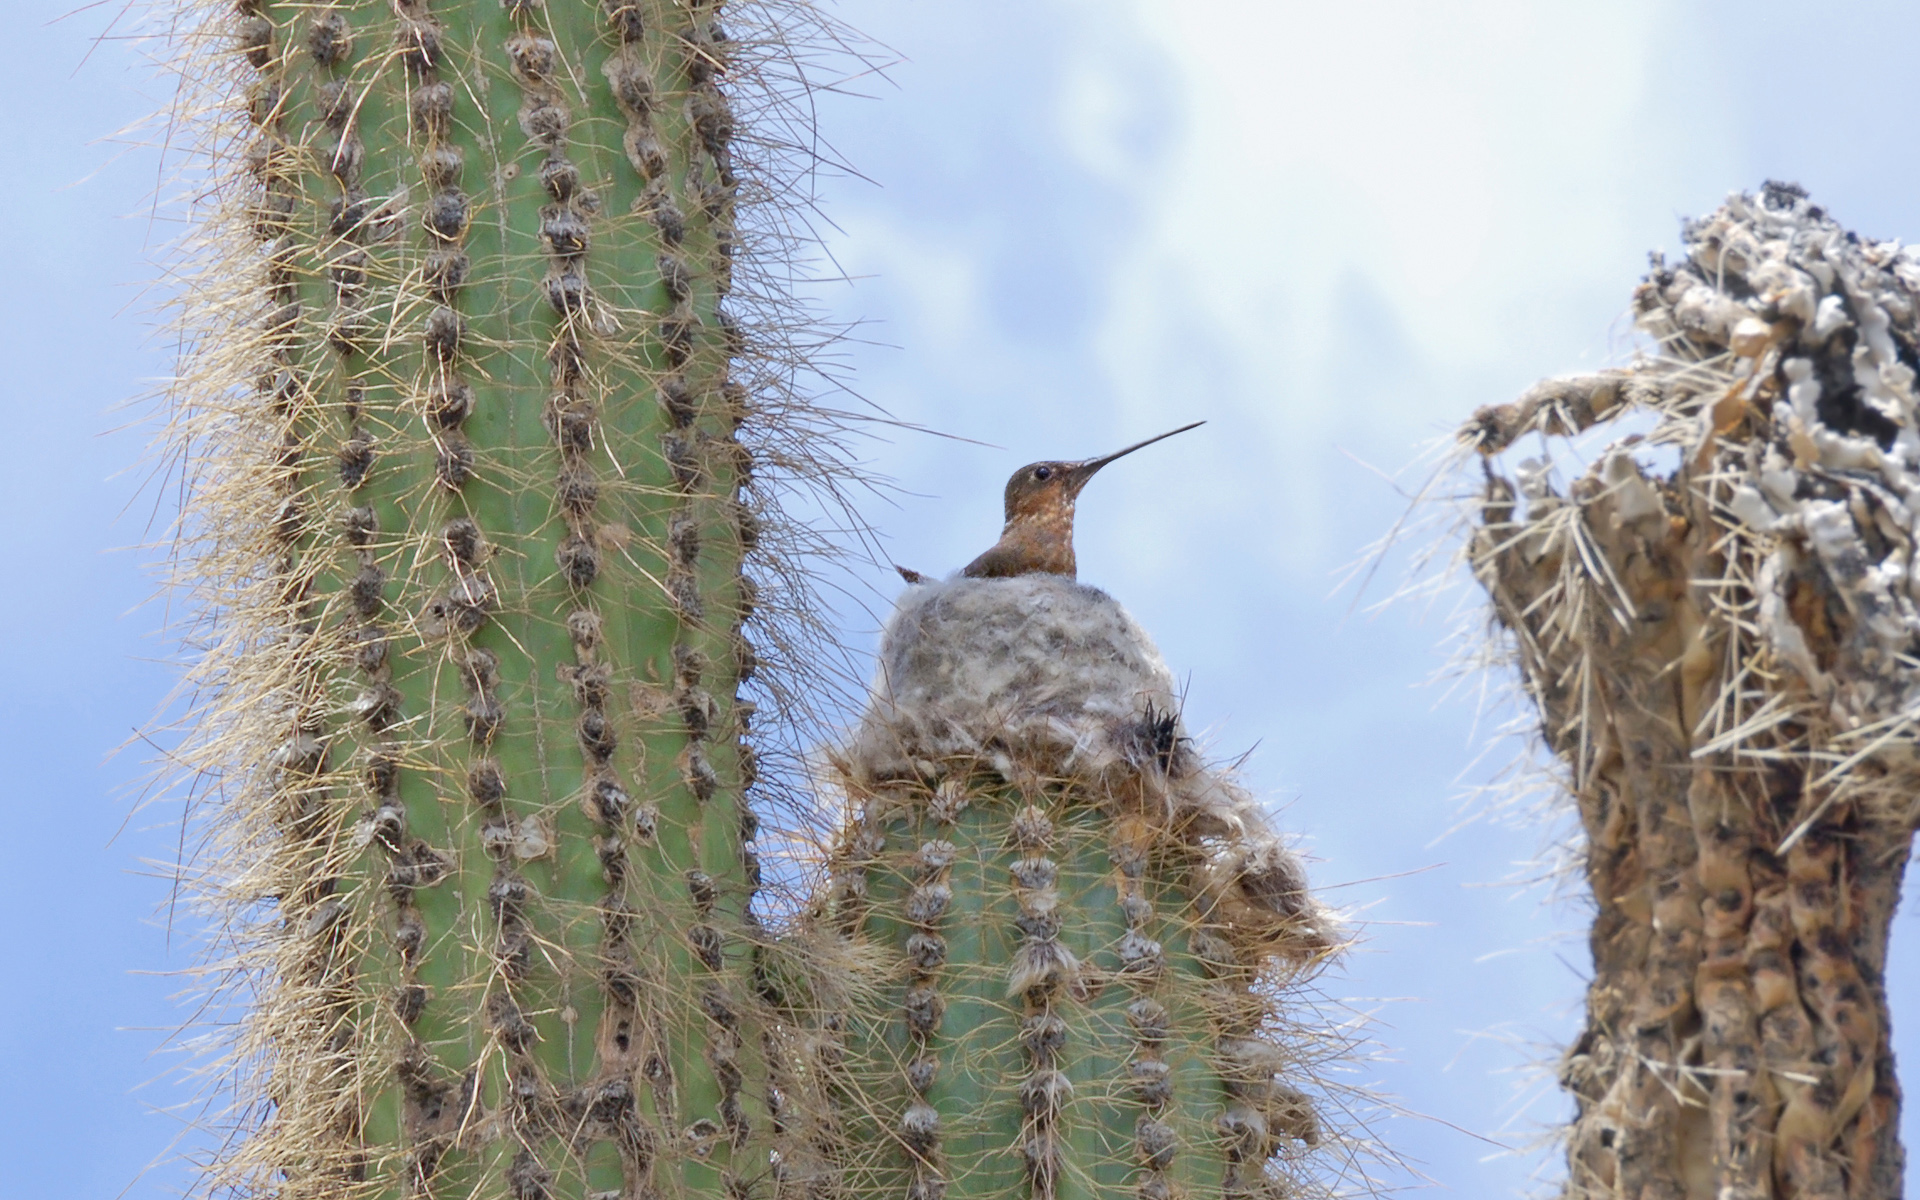 Giant hummingbird (Patagona gigas). Image credit: Mario Giorgetta